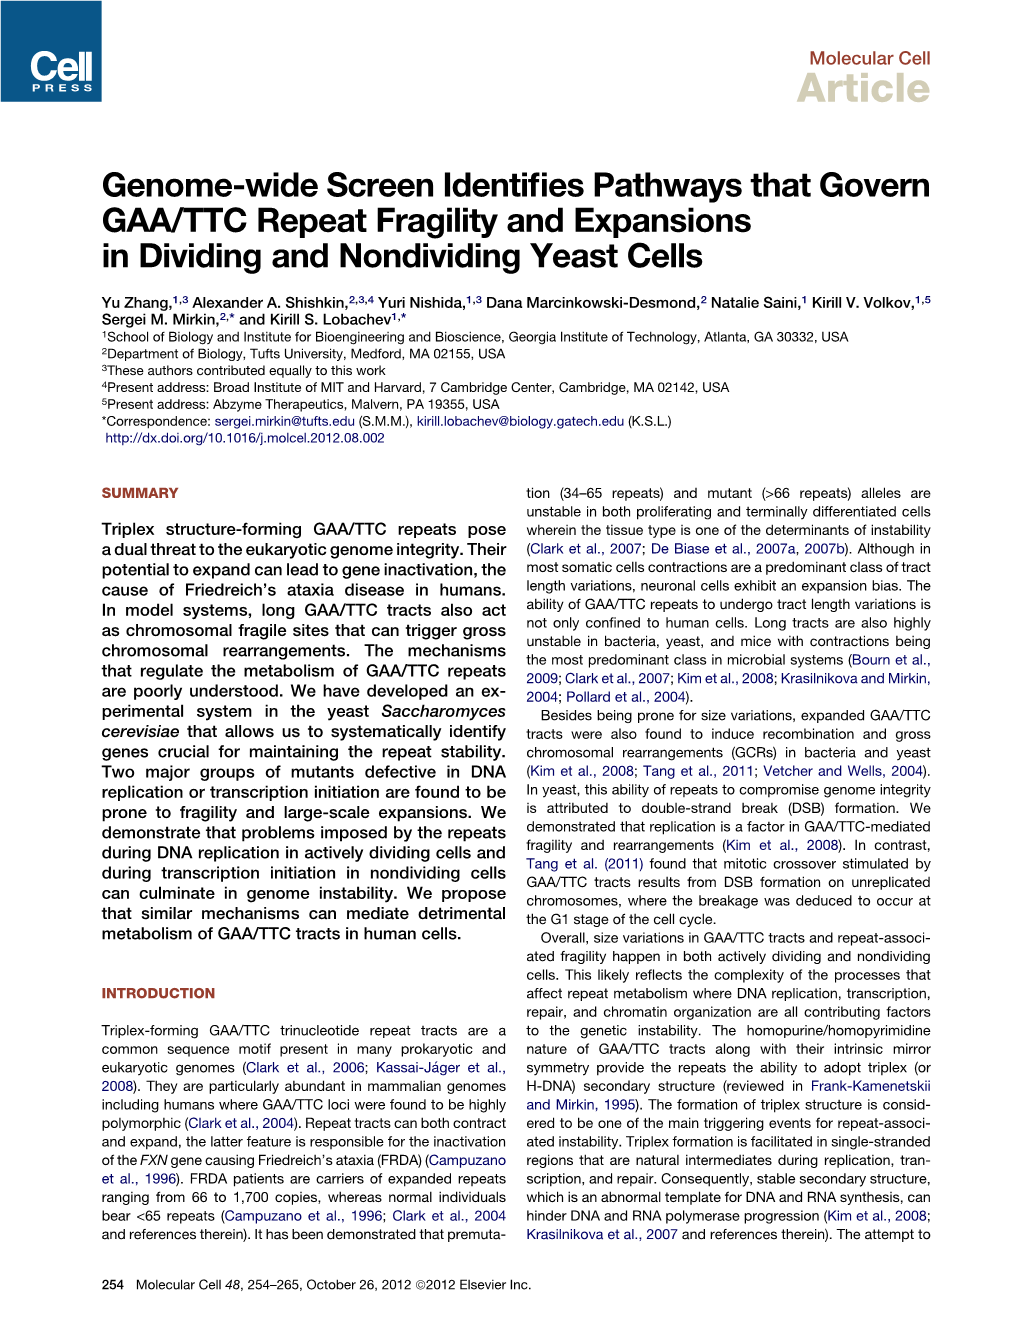 Genome-Wide Screen Identifies Pathways That Govern GAA/TTC